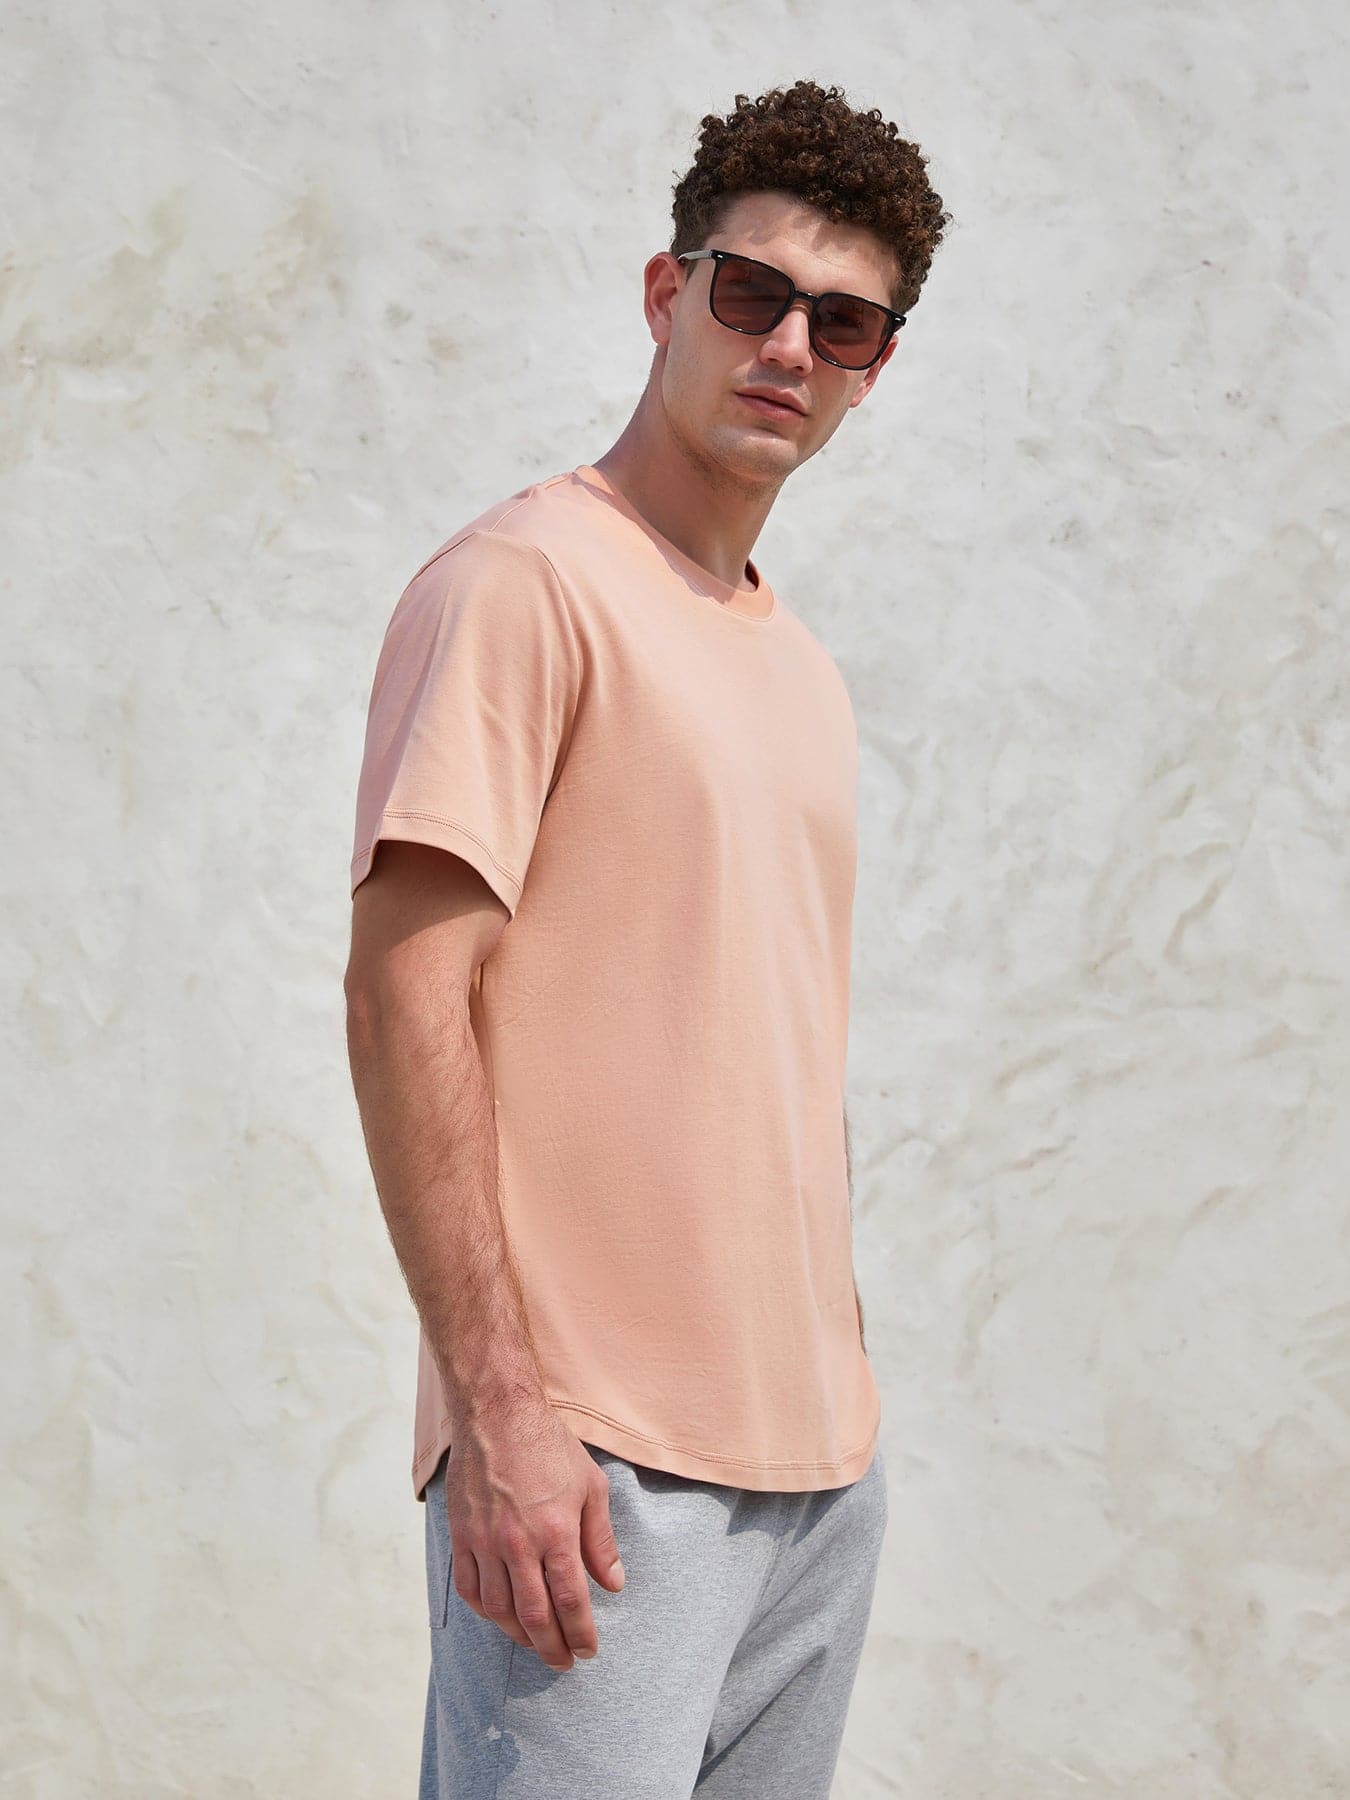 Fioboc Men's Premium Moisture Wicking Shirts Slim Fit Split-Hem